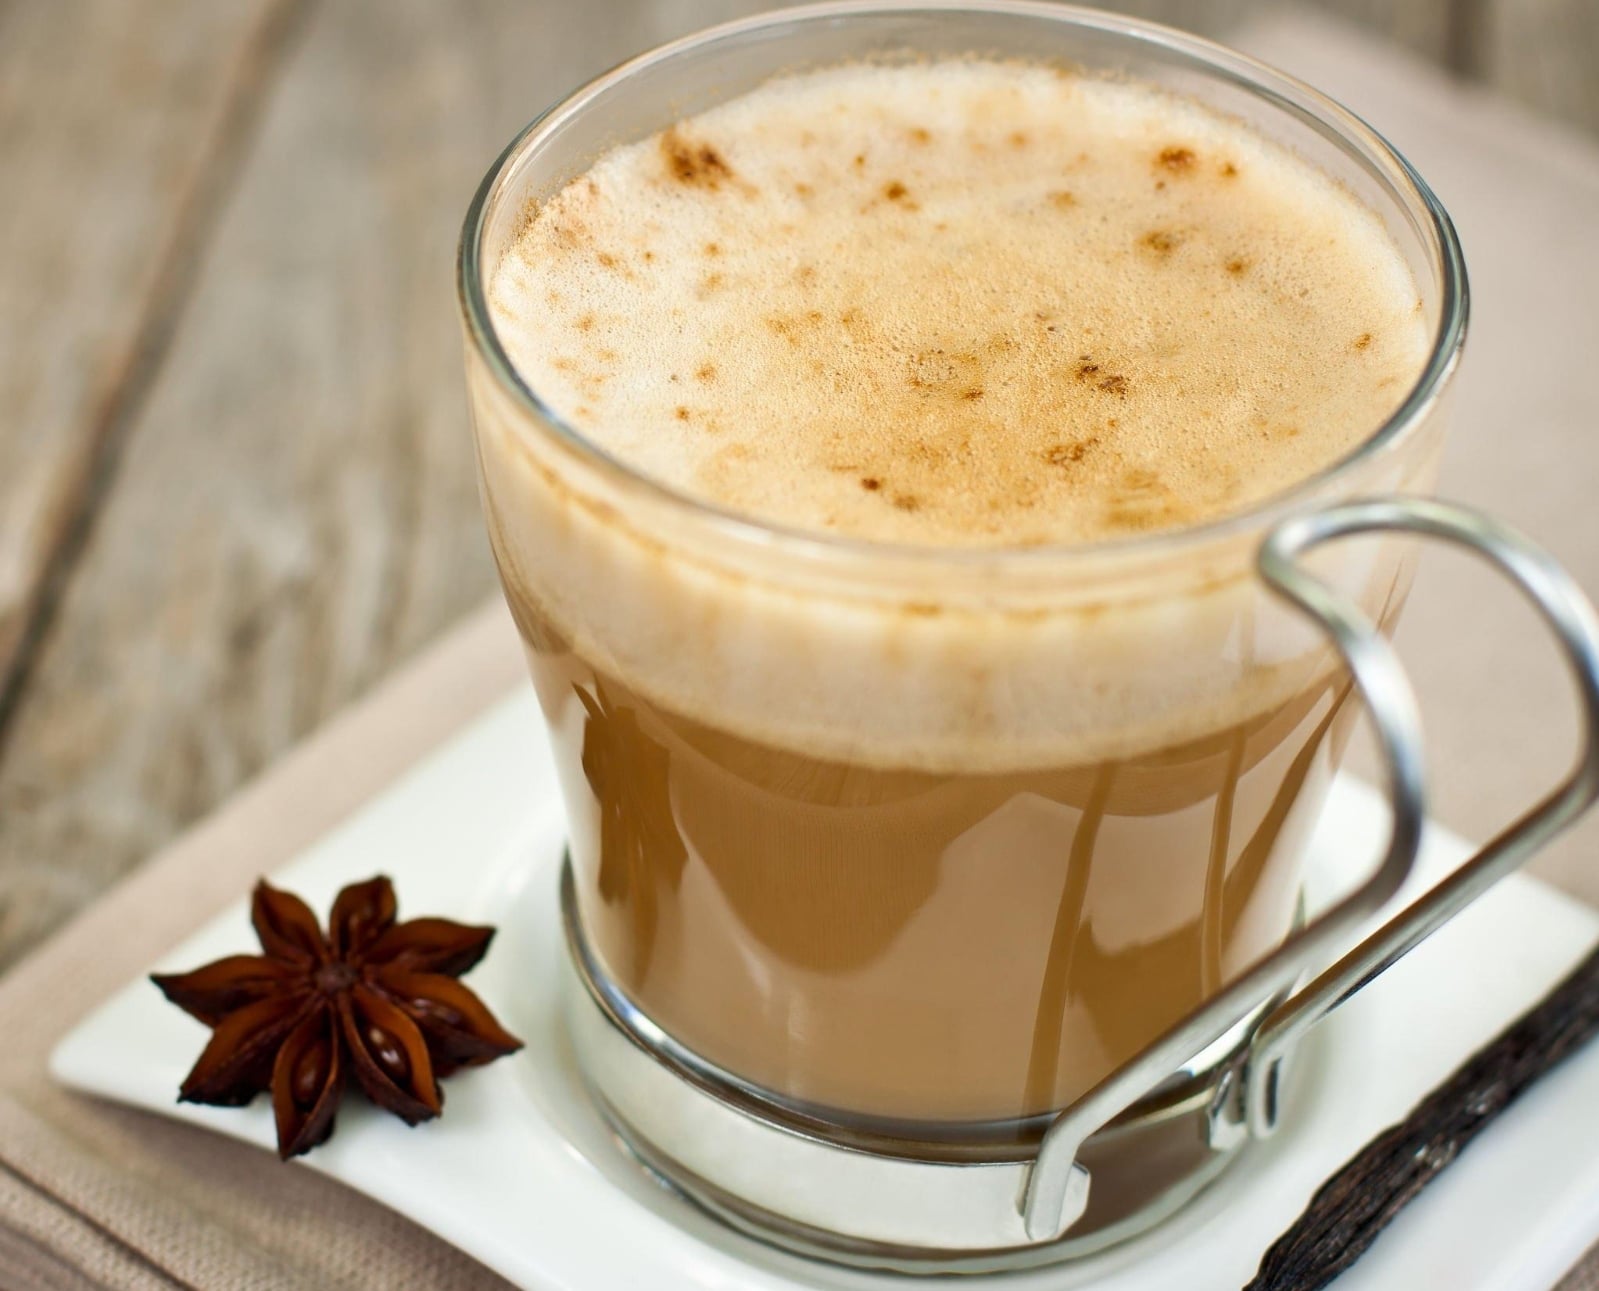 Is Vanilla Good in Coffee?